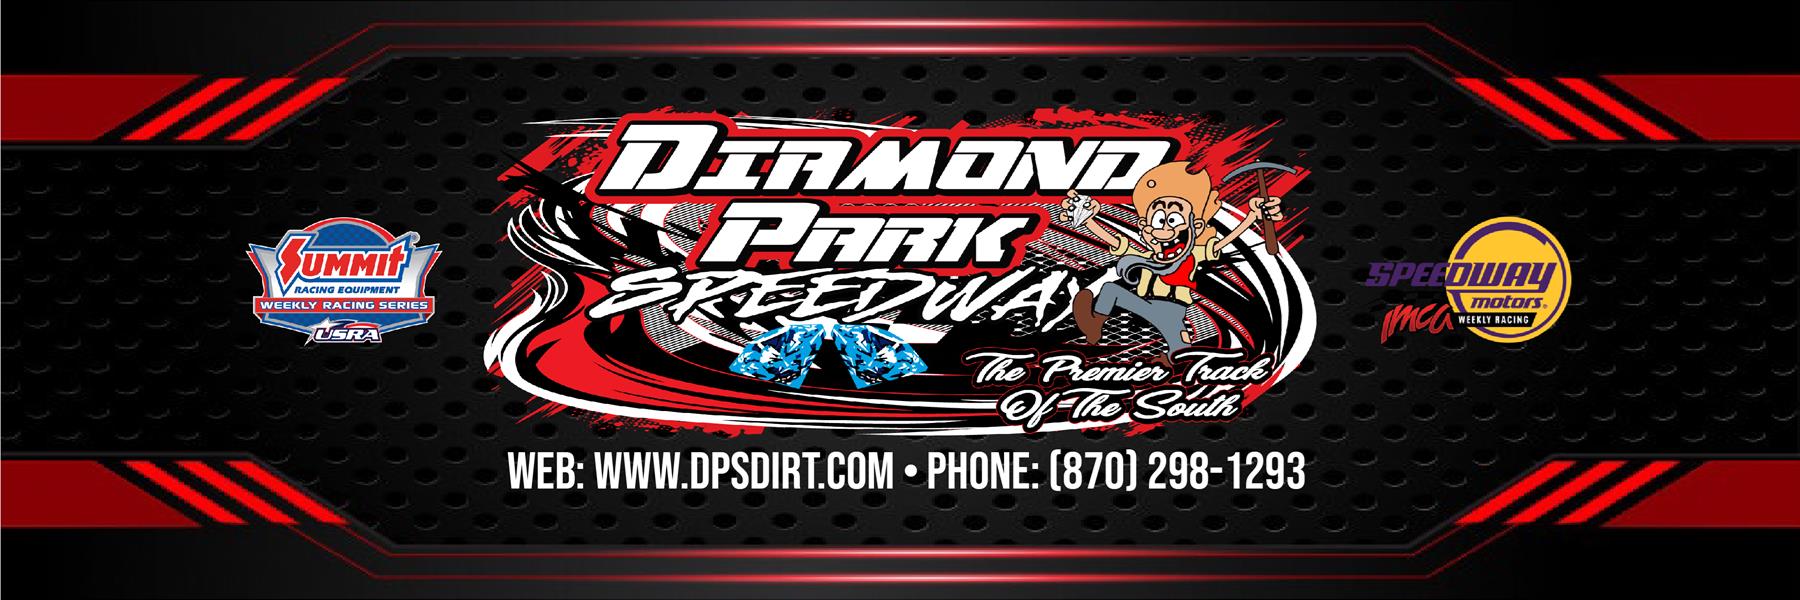 4/27/2019 - Diamond Park Speedway